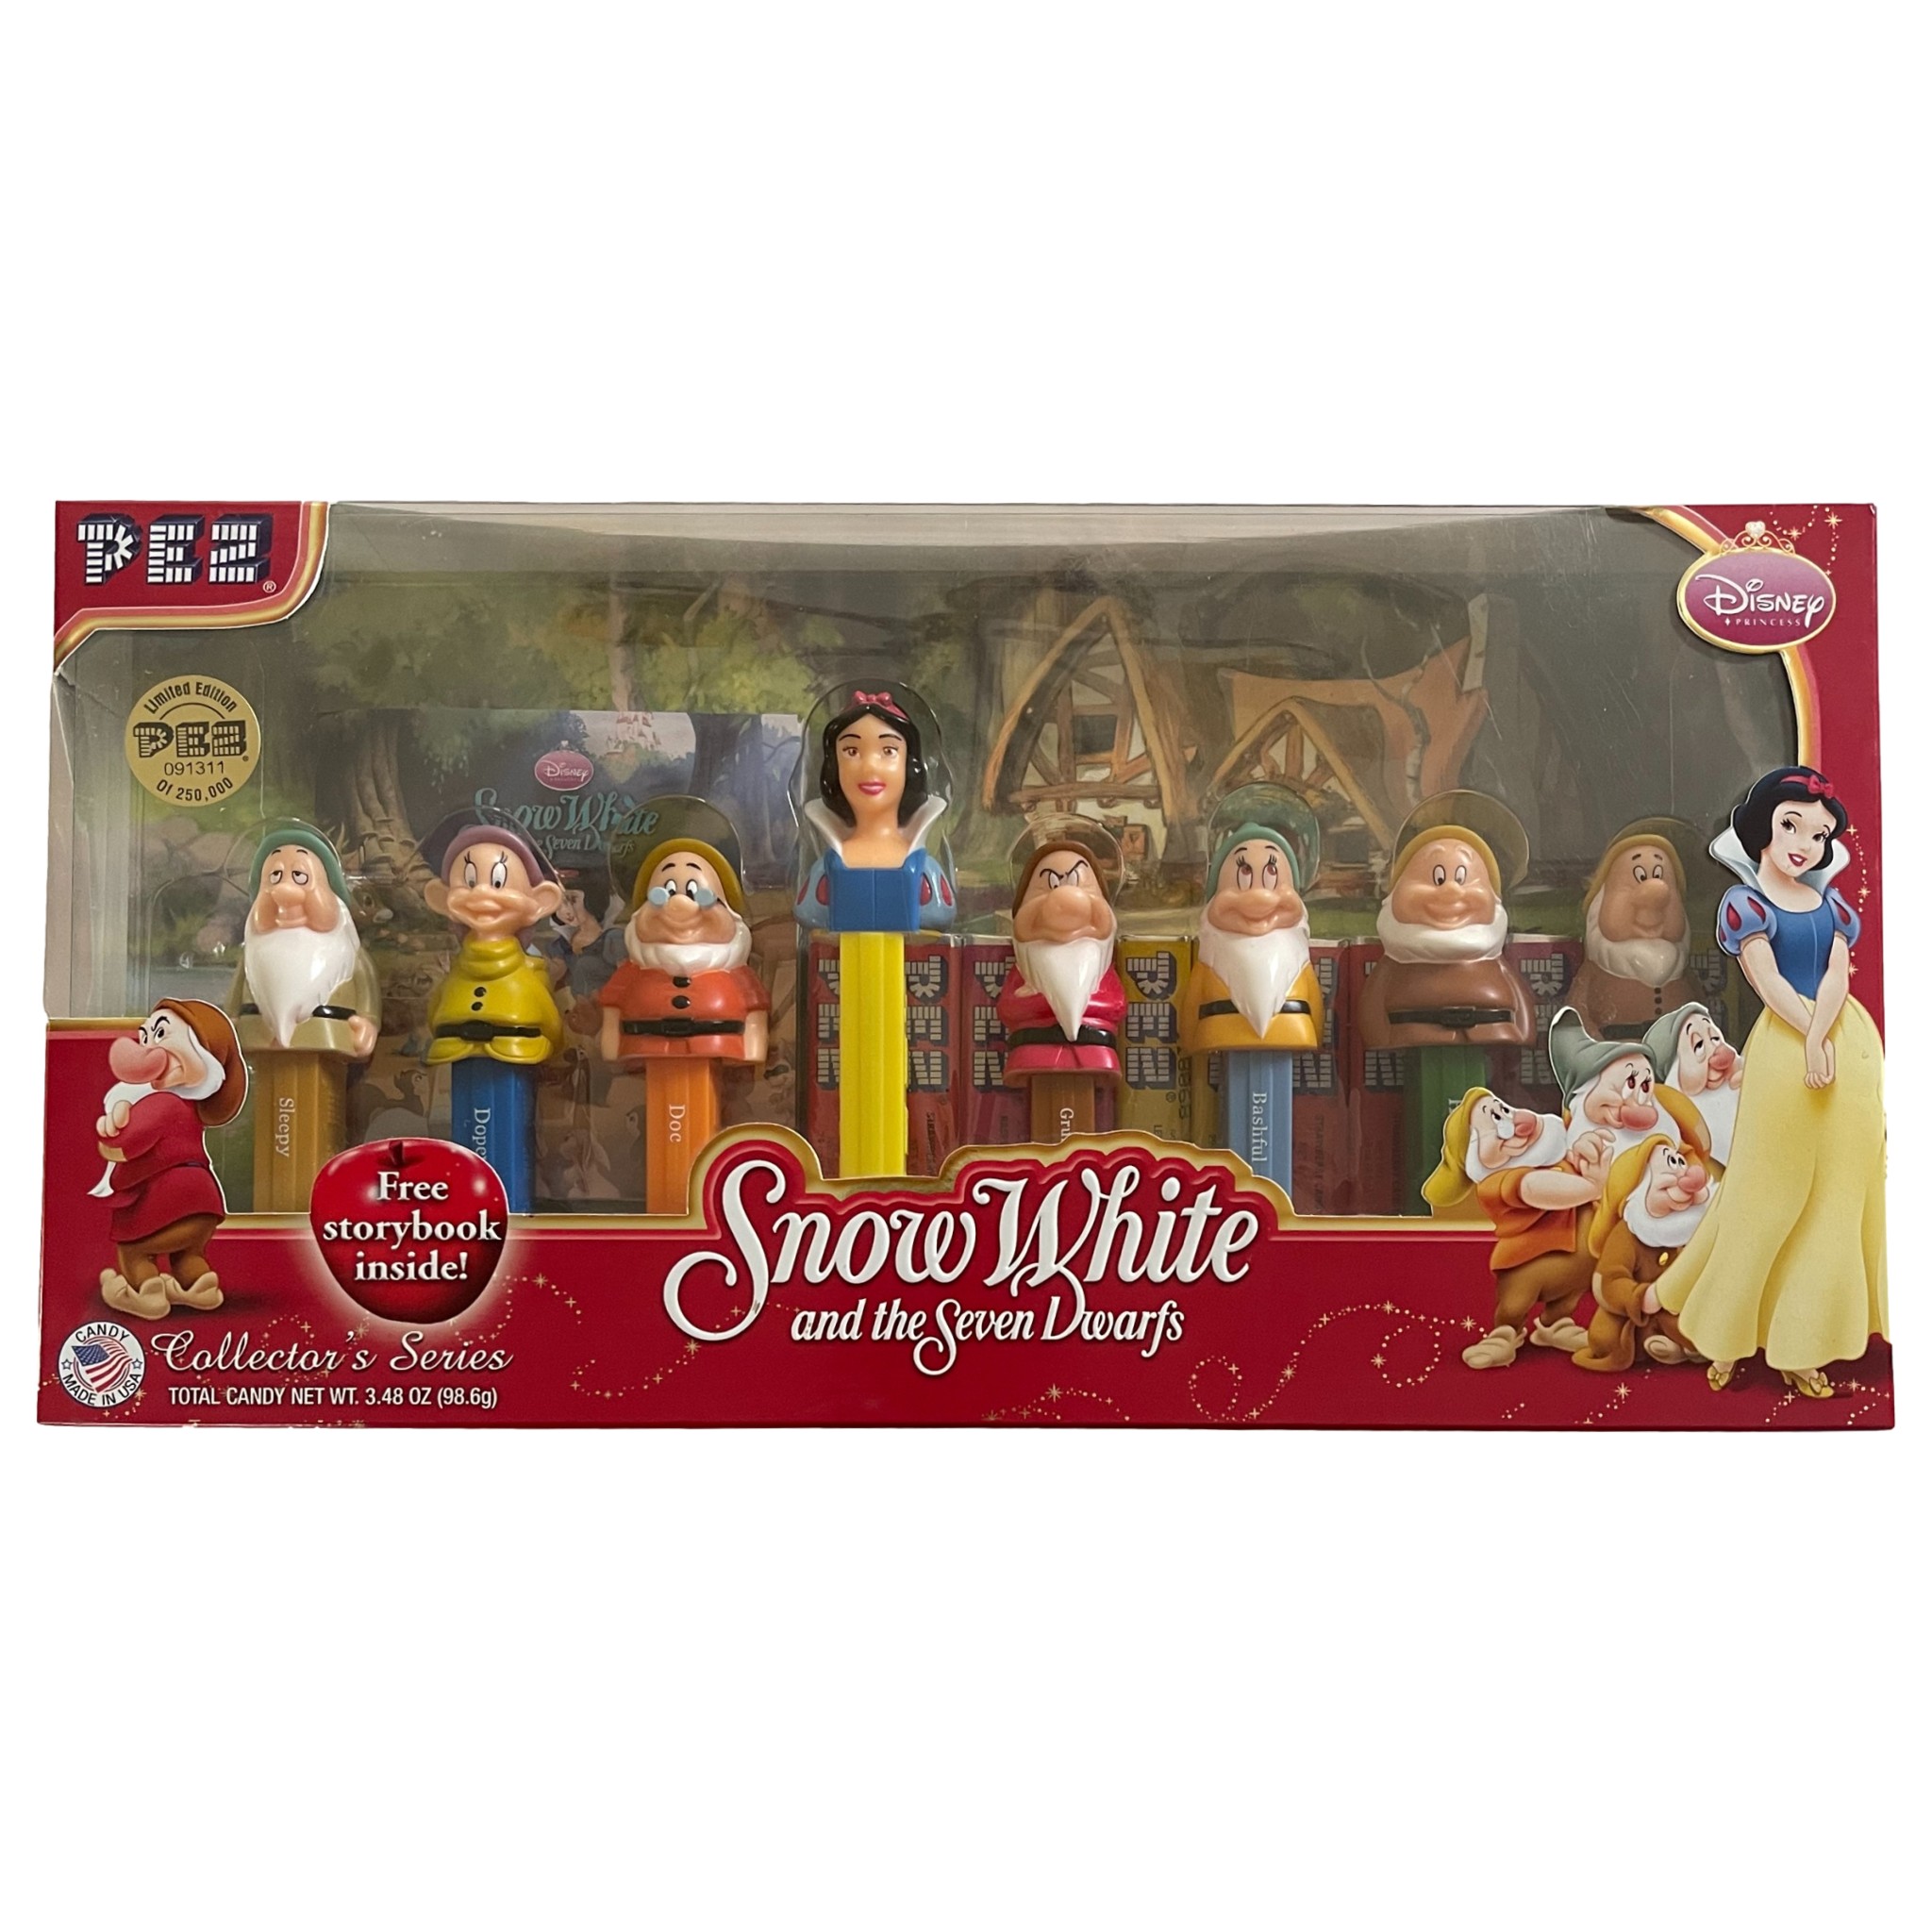 Pez Candy Snow White & the 7 Dwarfs Gift Set, Novelty Candy Pez Dispensers Toys